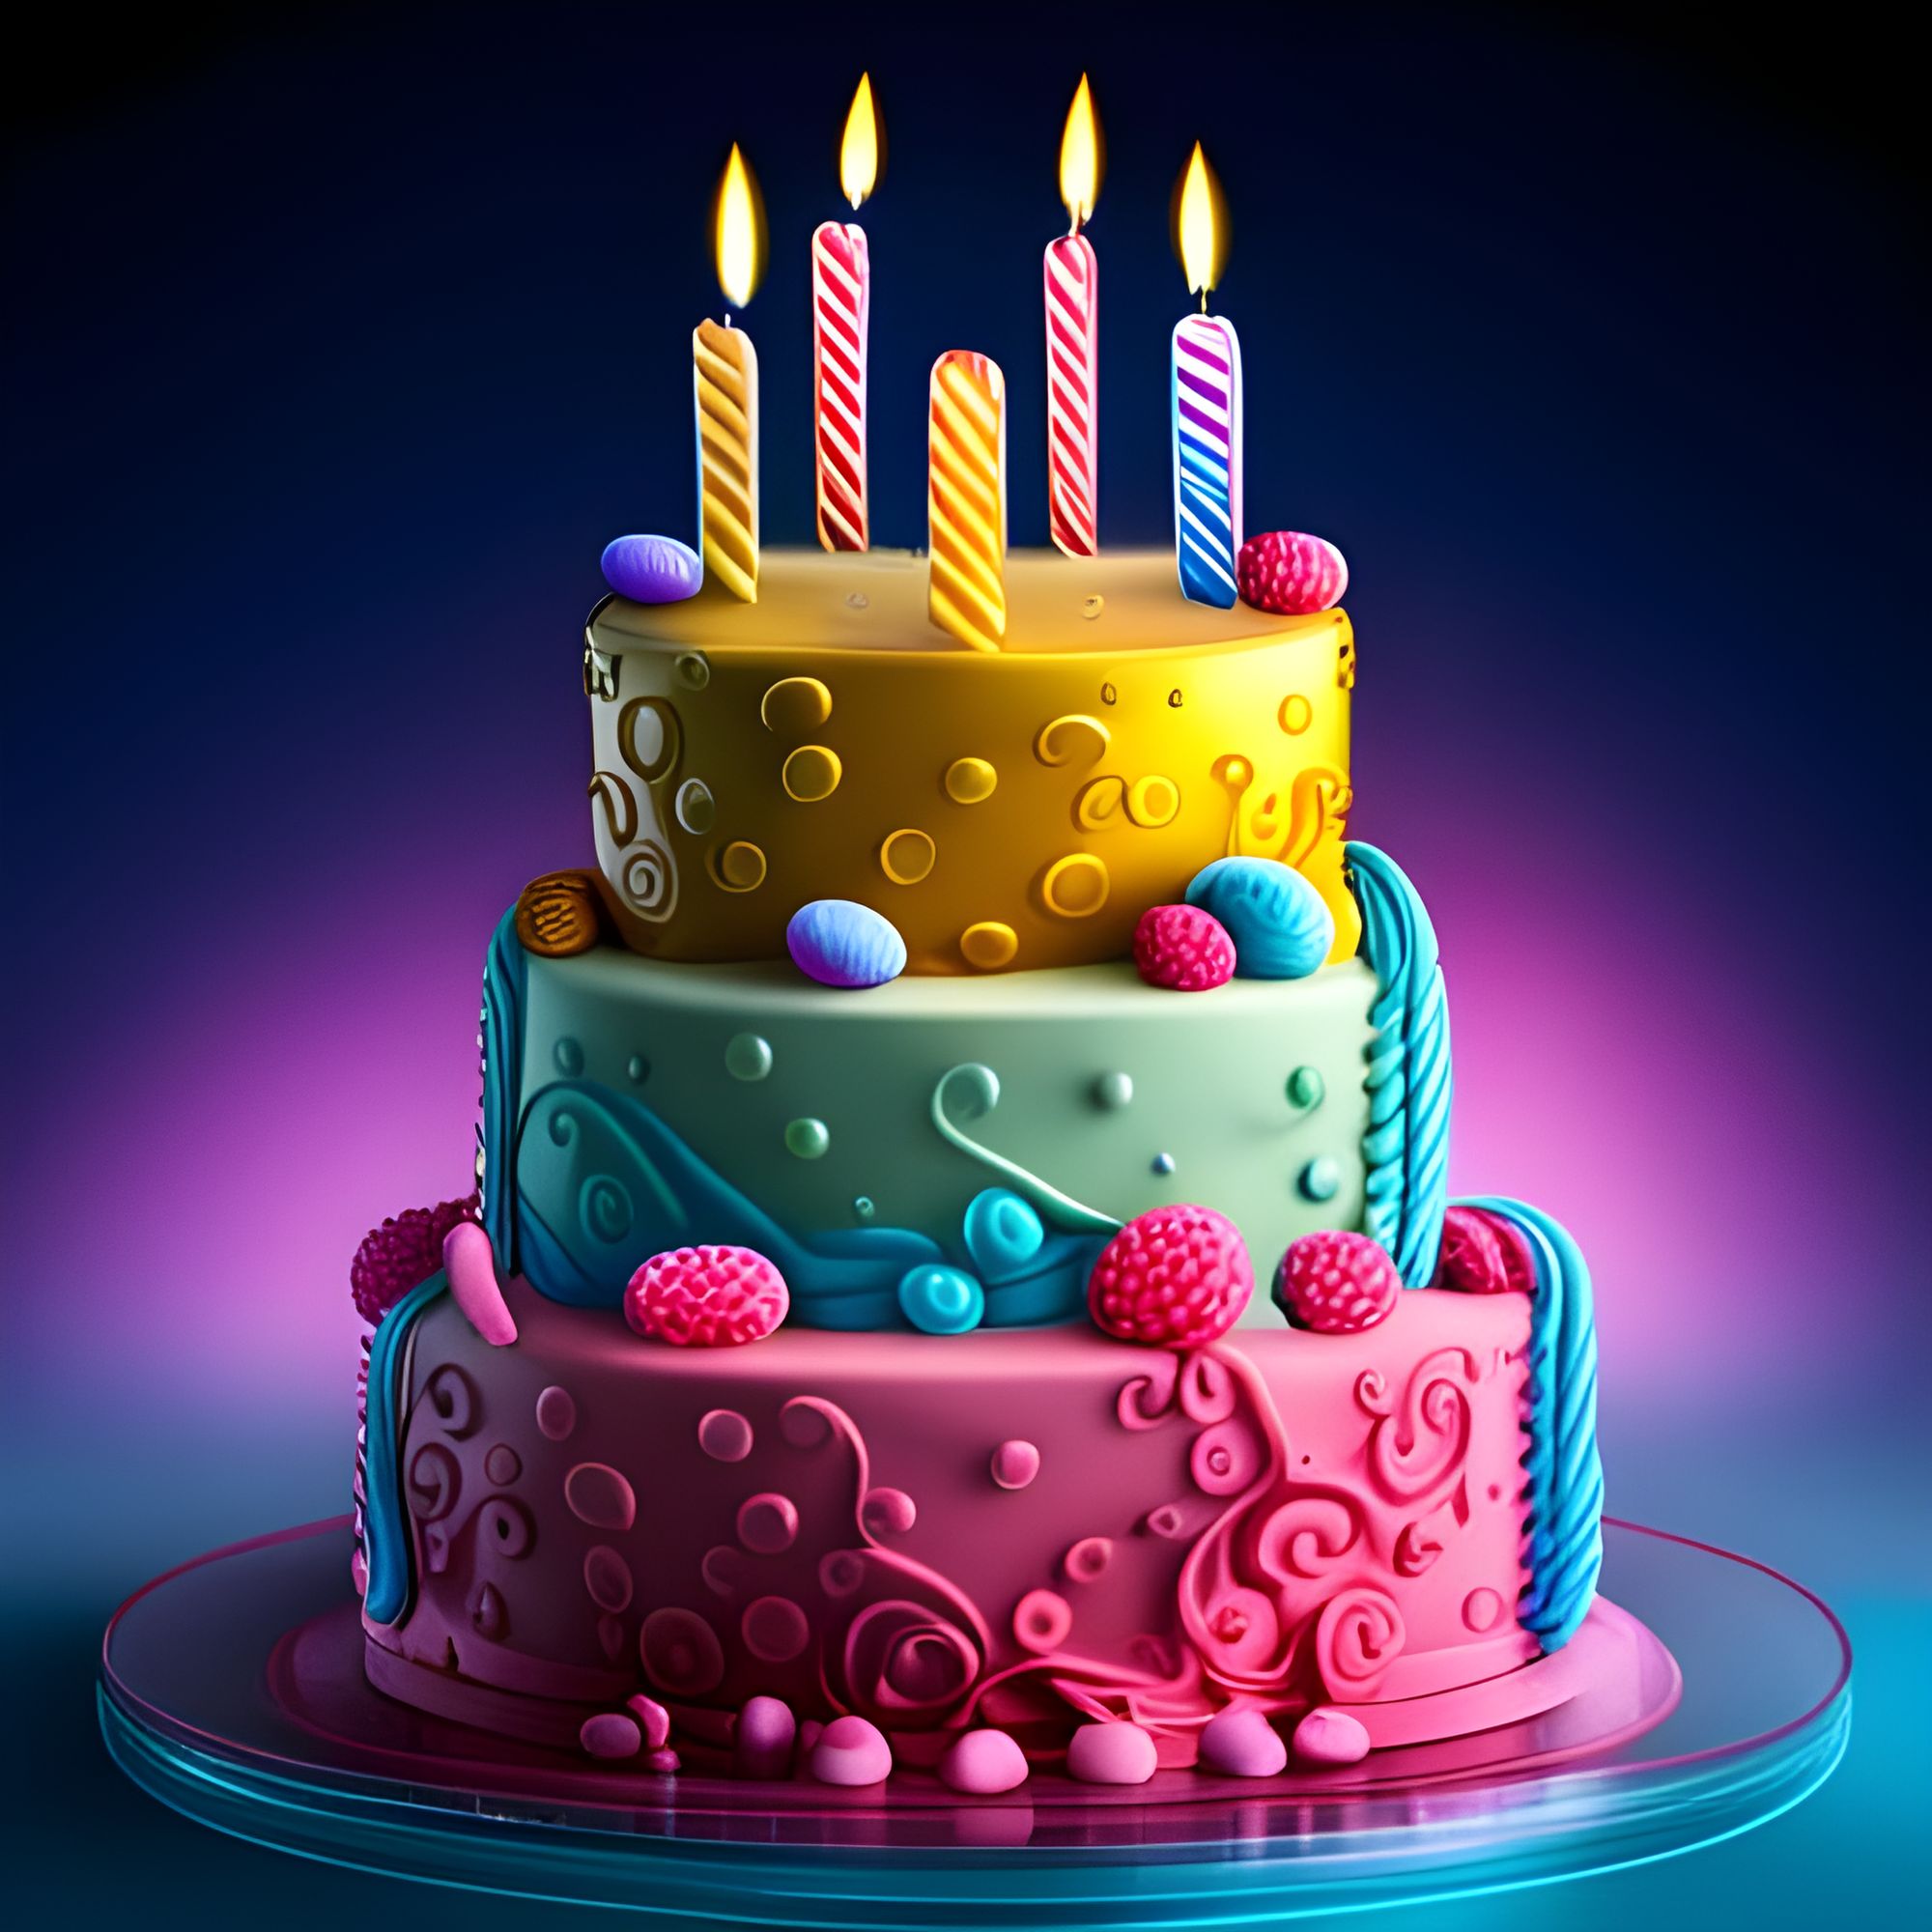 Free Image on Pixabay - Cakes, Brownie, Chocolate | Happy birthday cakes,  Birthday wishes cake, Cake images